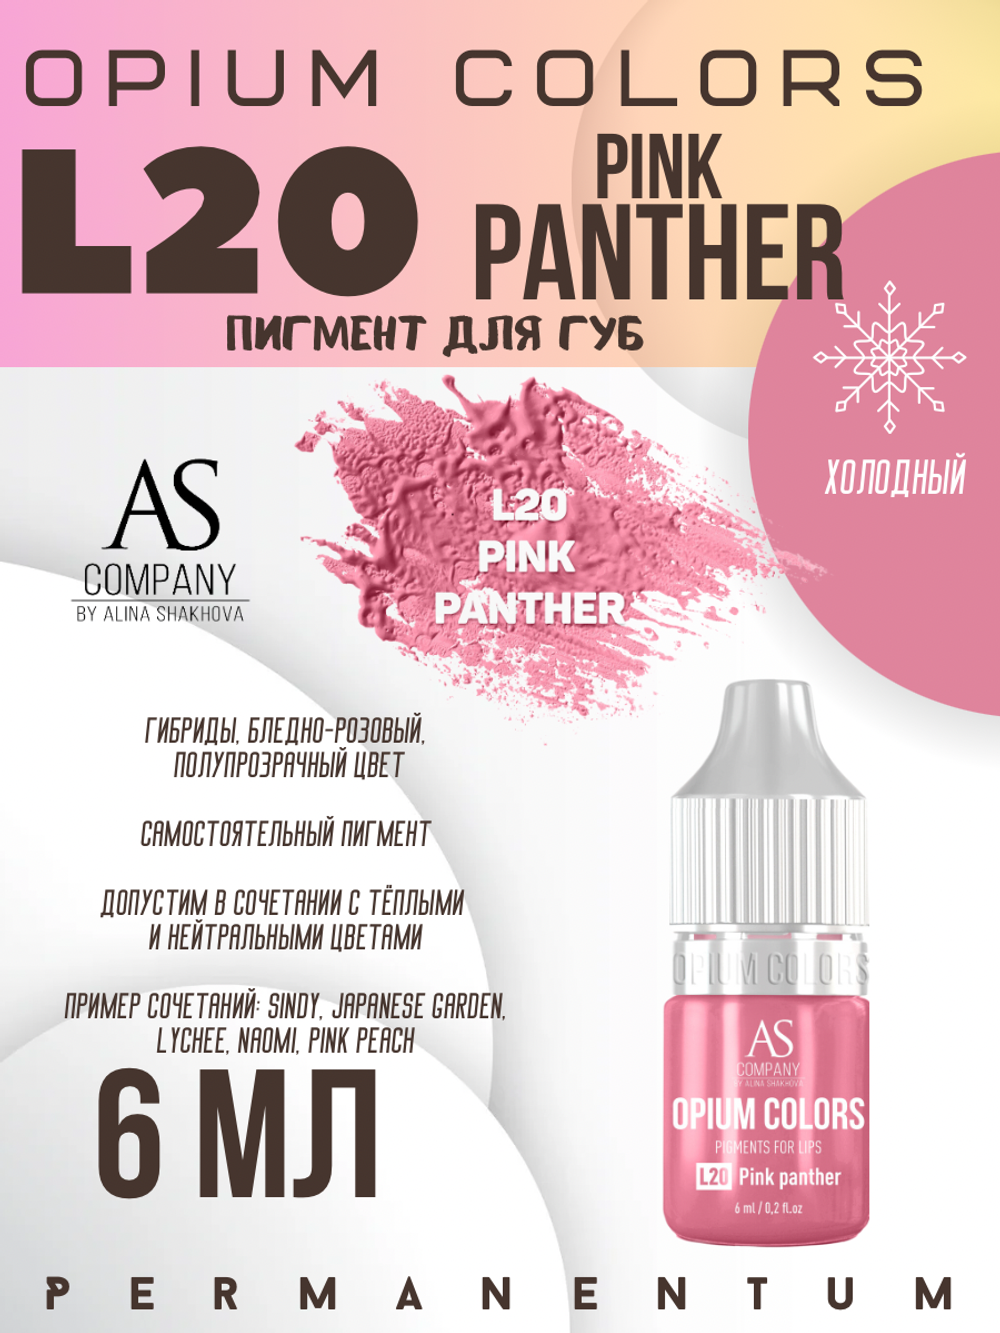 L20 PINK PANTHER пигмент для губ TM AS-Company OPIUM COLORS